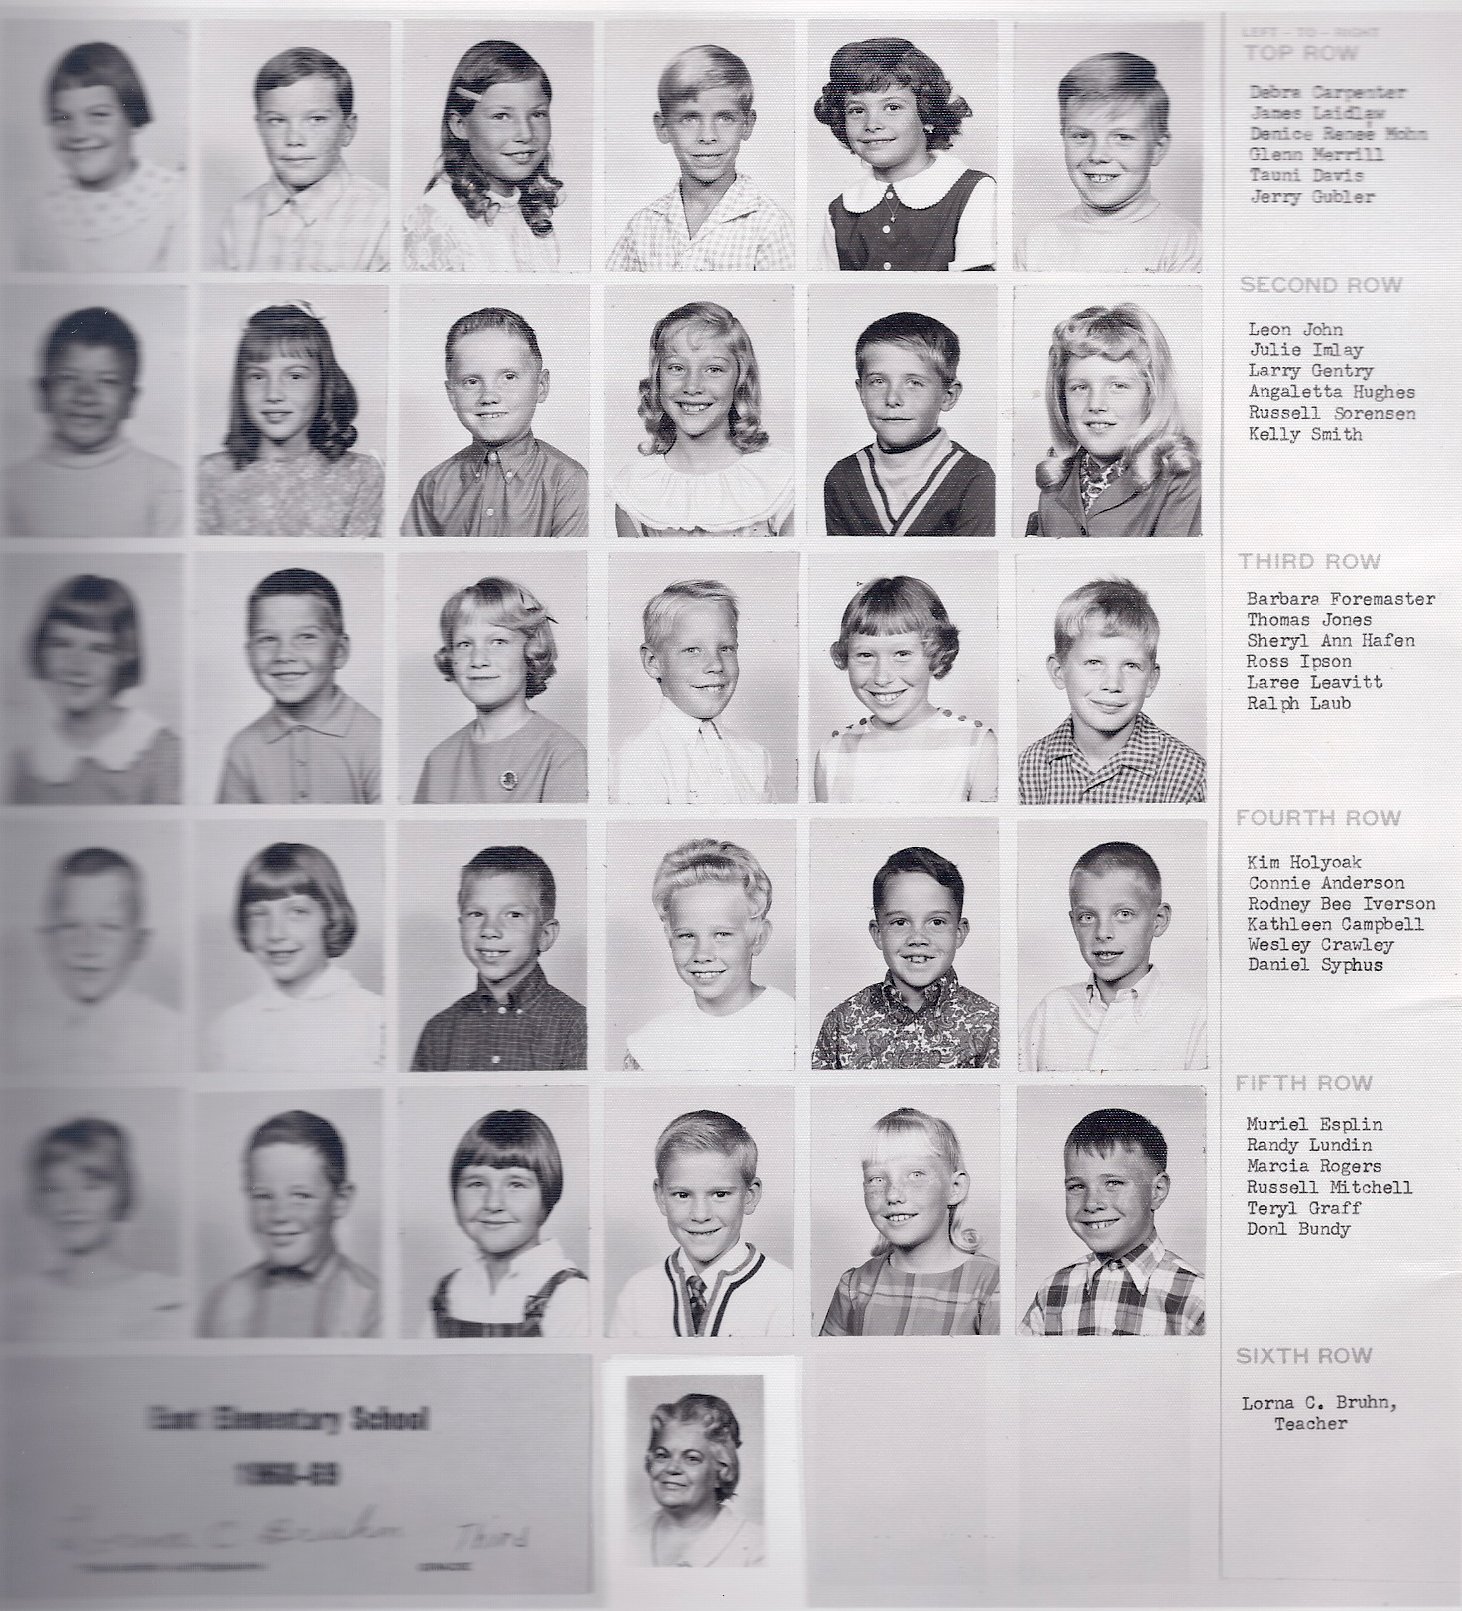 Mrs. Lorna Bruhn's 1968-1969 third grade class at East Elementary School